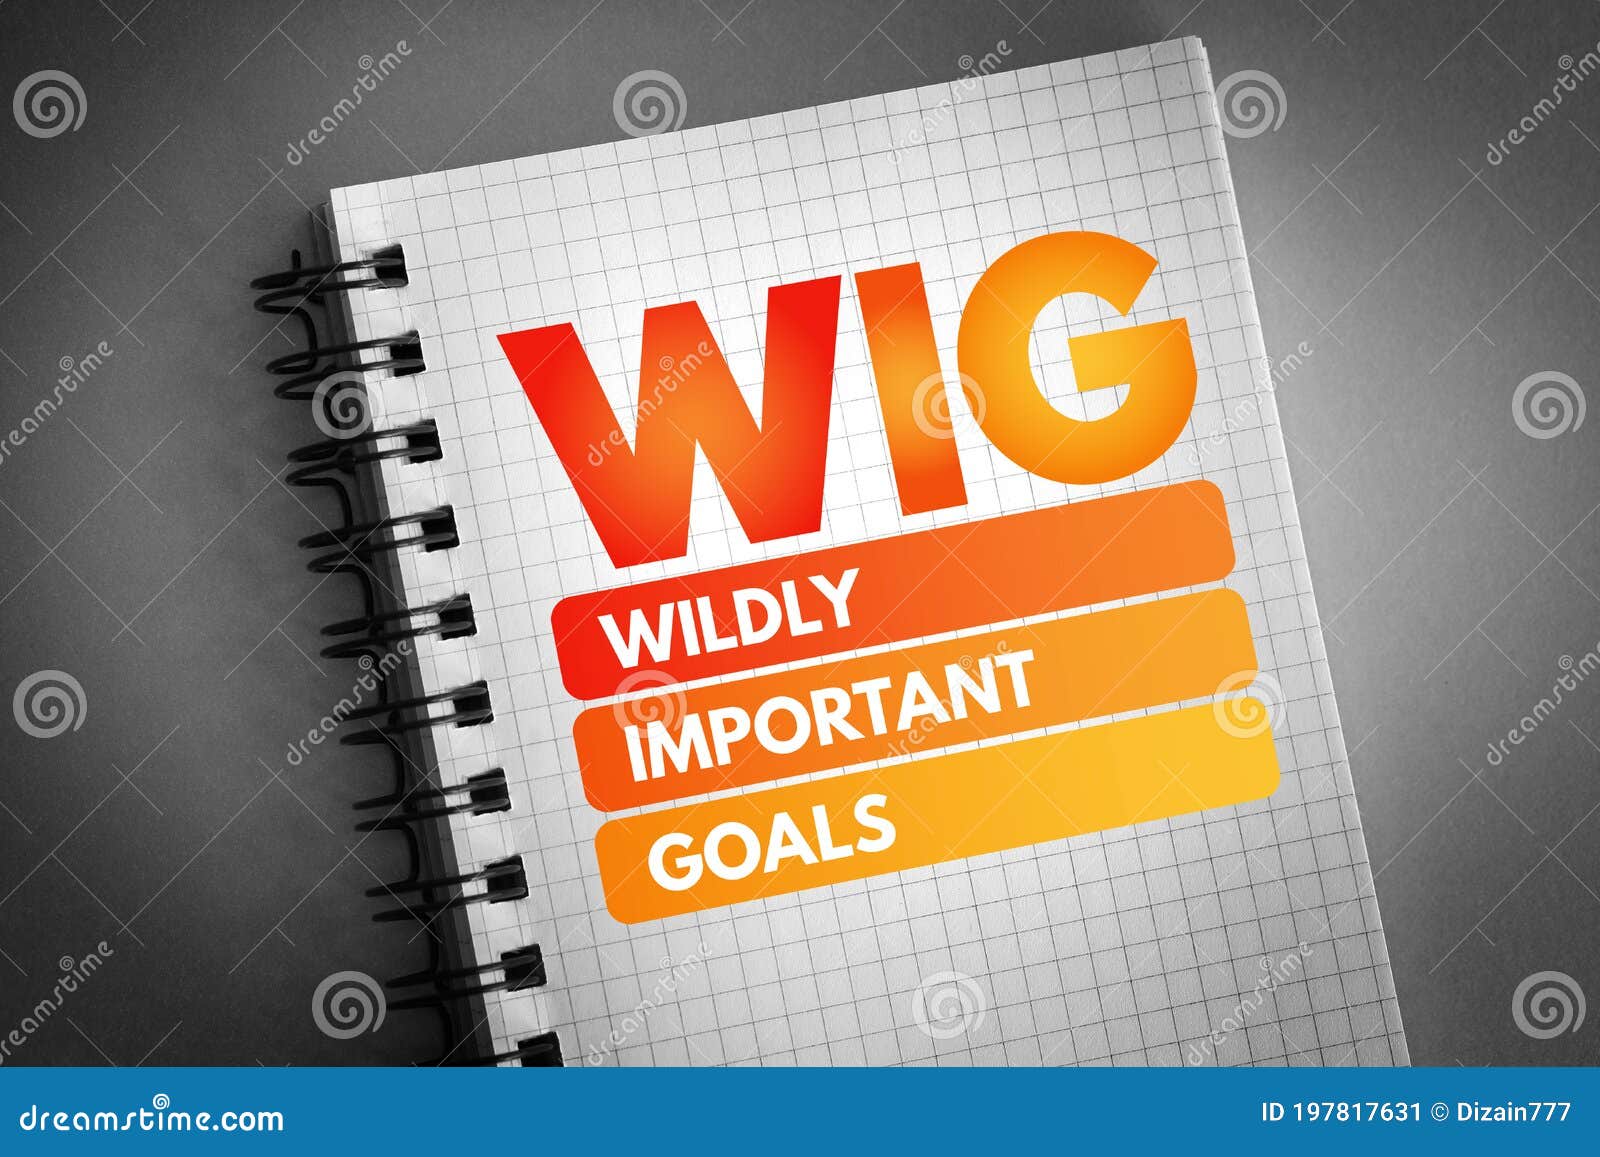 wig - wildly important goals acronym